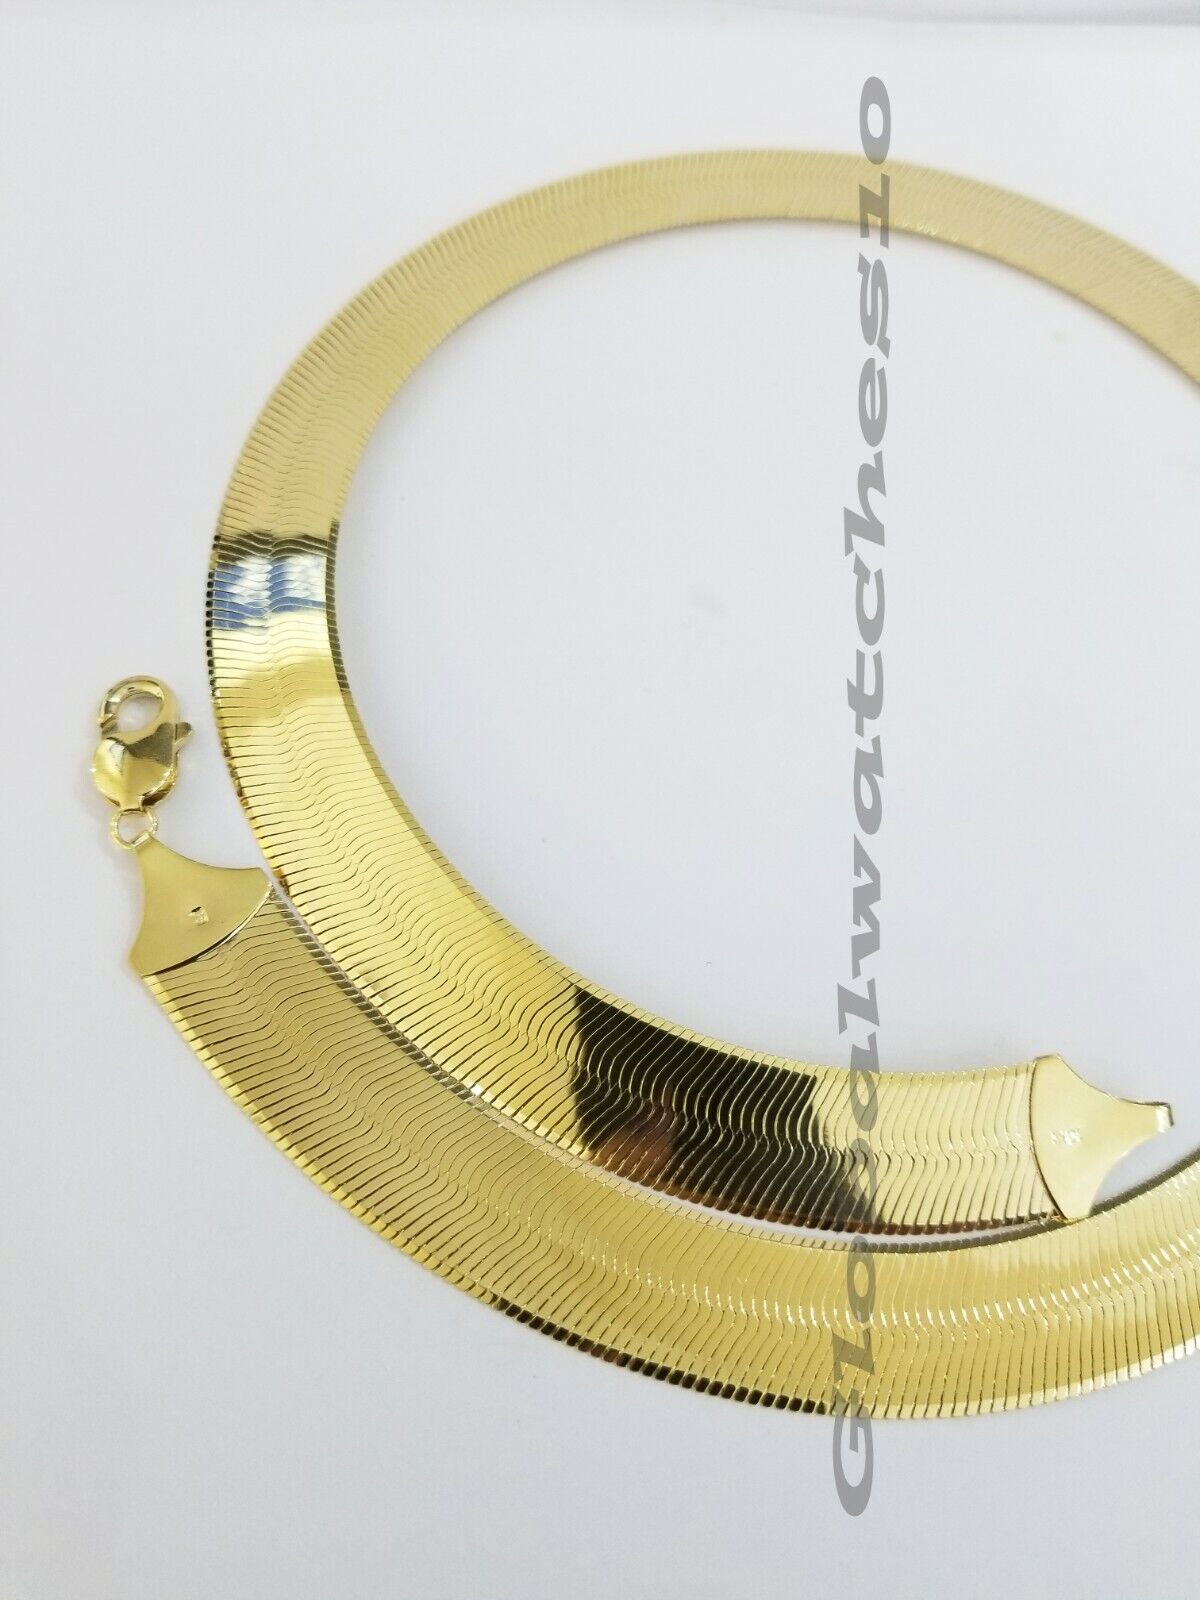 REAL 10k 15mm Yellow Gold Herring Bone Chain Necklace 20 Inch Men Women, SALE